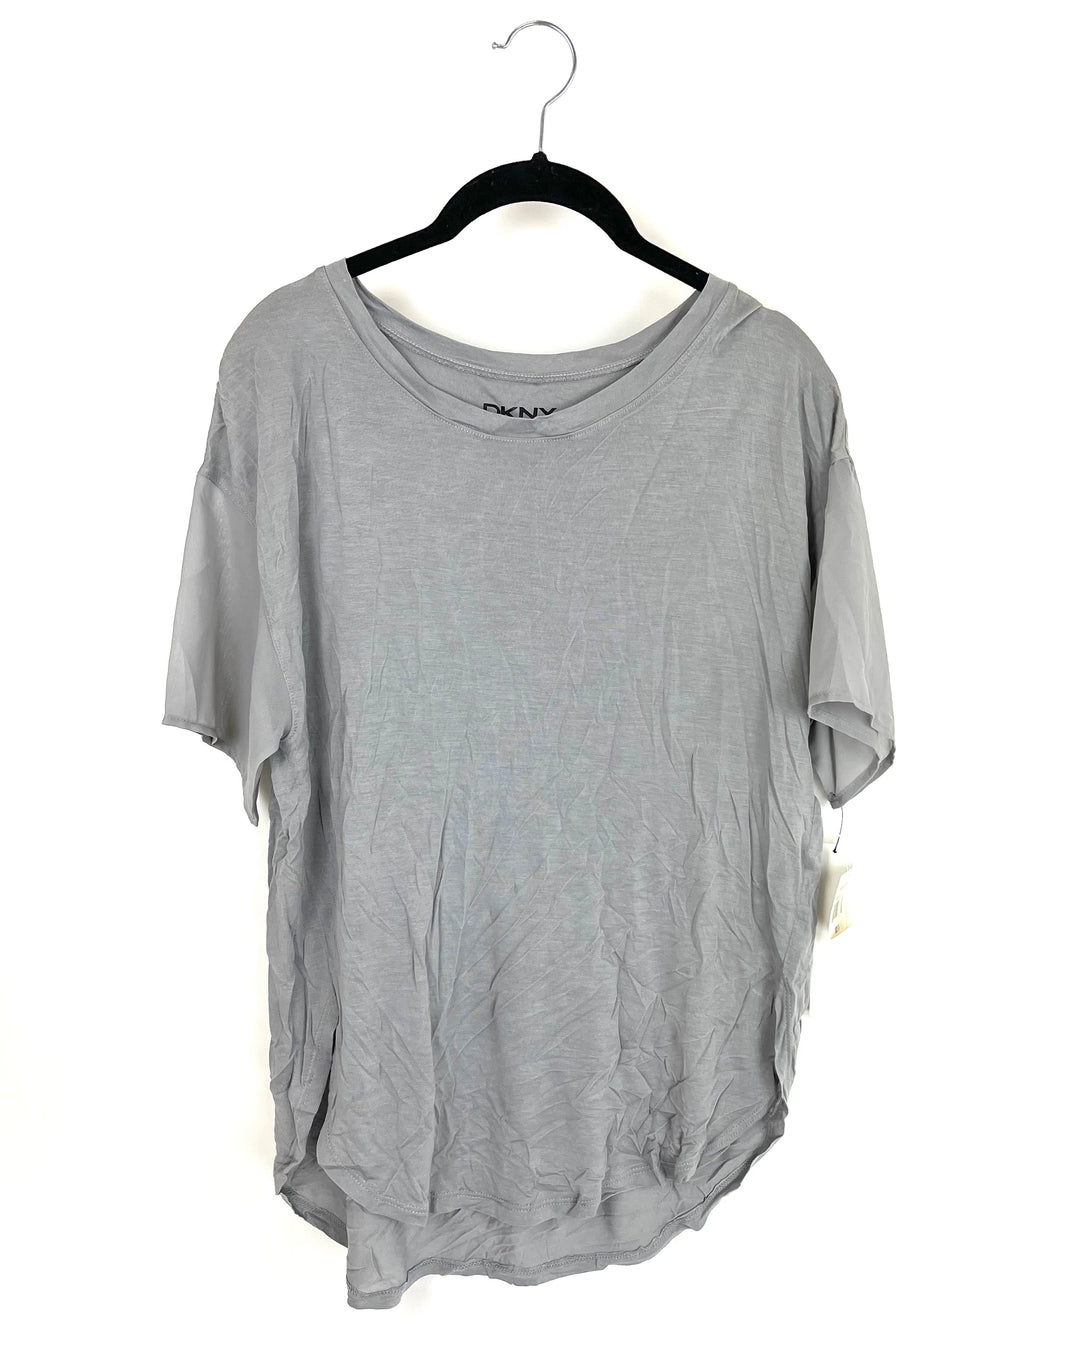 Light Grey Loungewear Top - Size 4/6